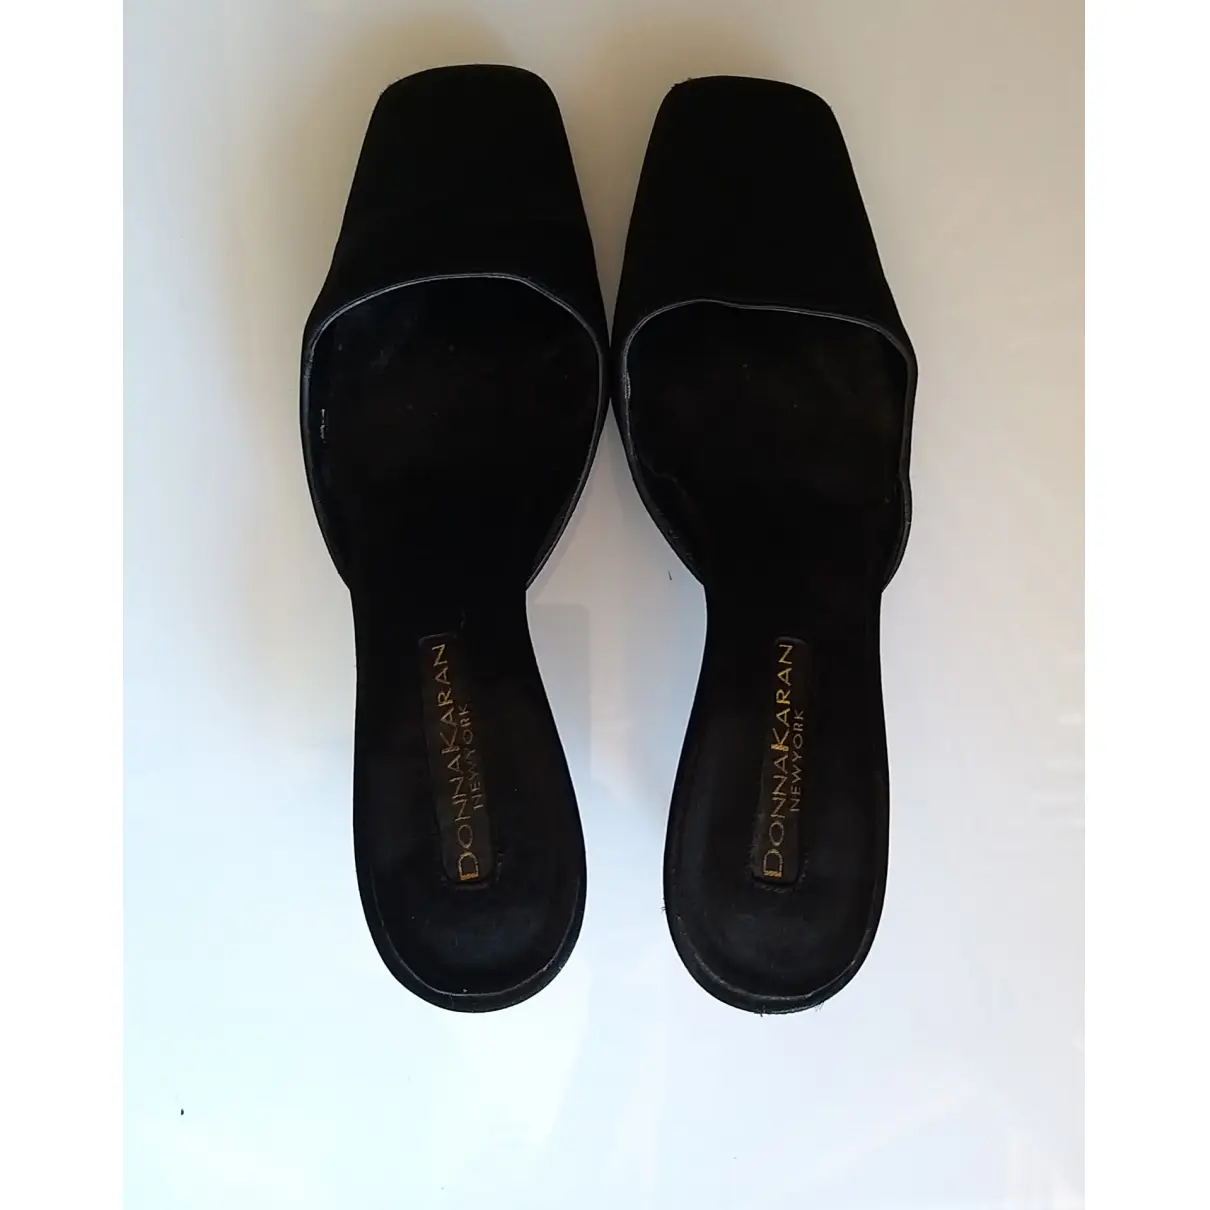 Buy Donna Karan Cloth heels online